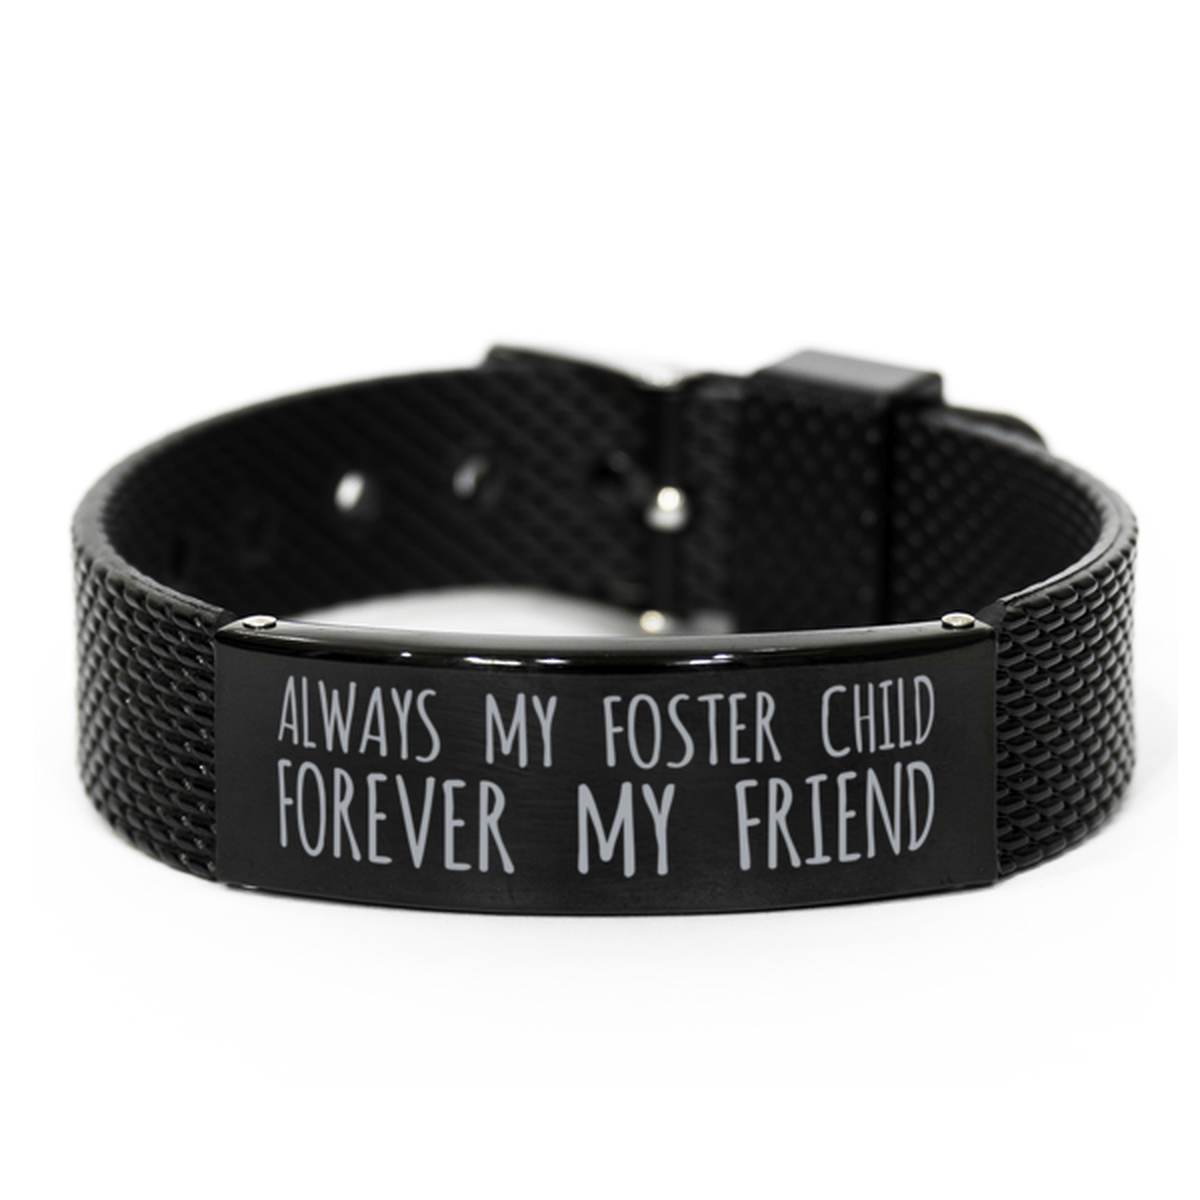 Inspirational Foster Child Black Shark Mesh Bracelet, Always My Foster Child Forever My Friend, Best Birthday Gifts for Family Friends